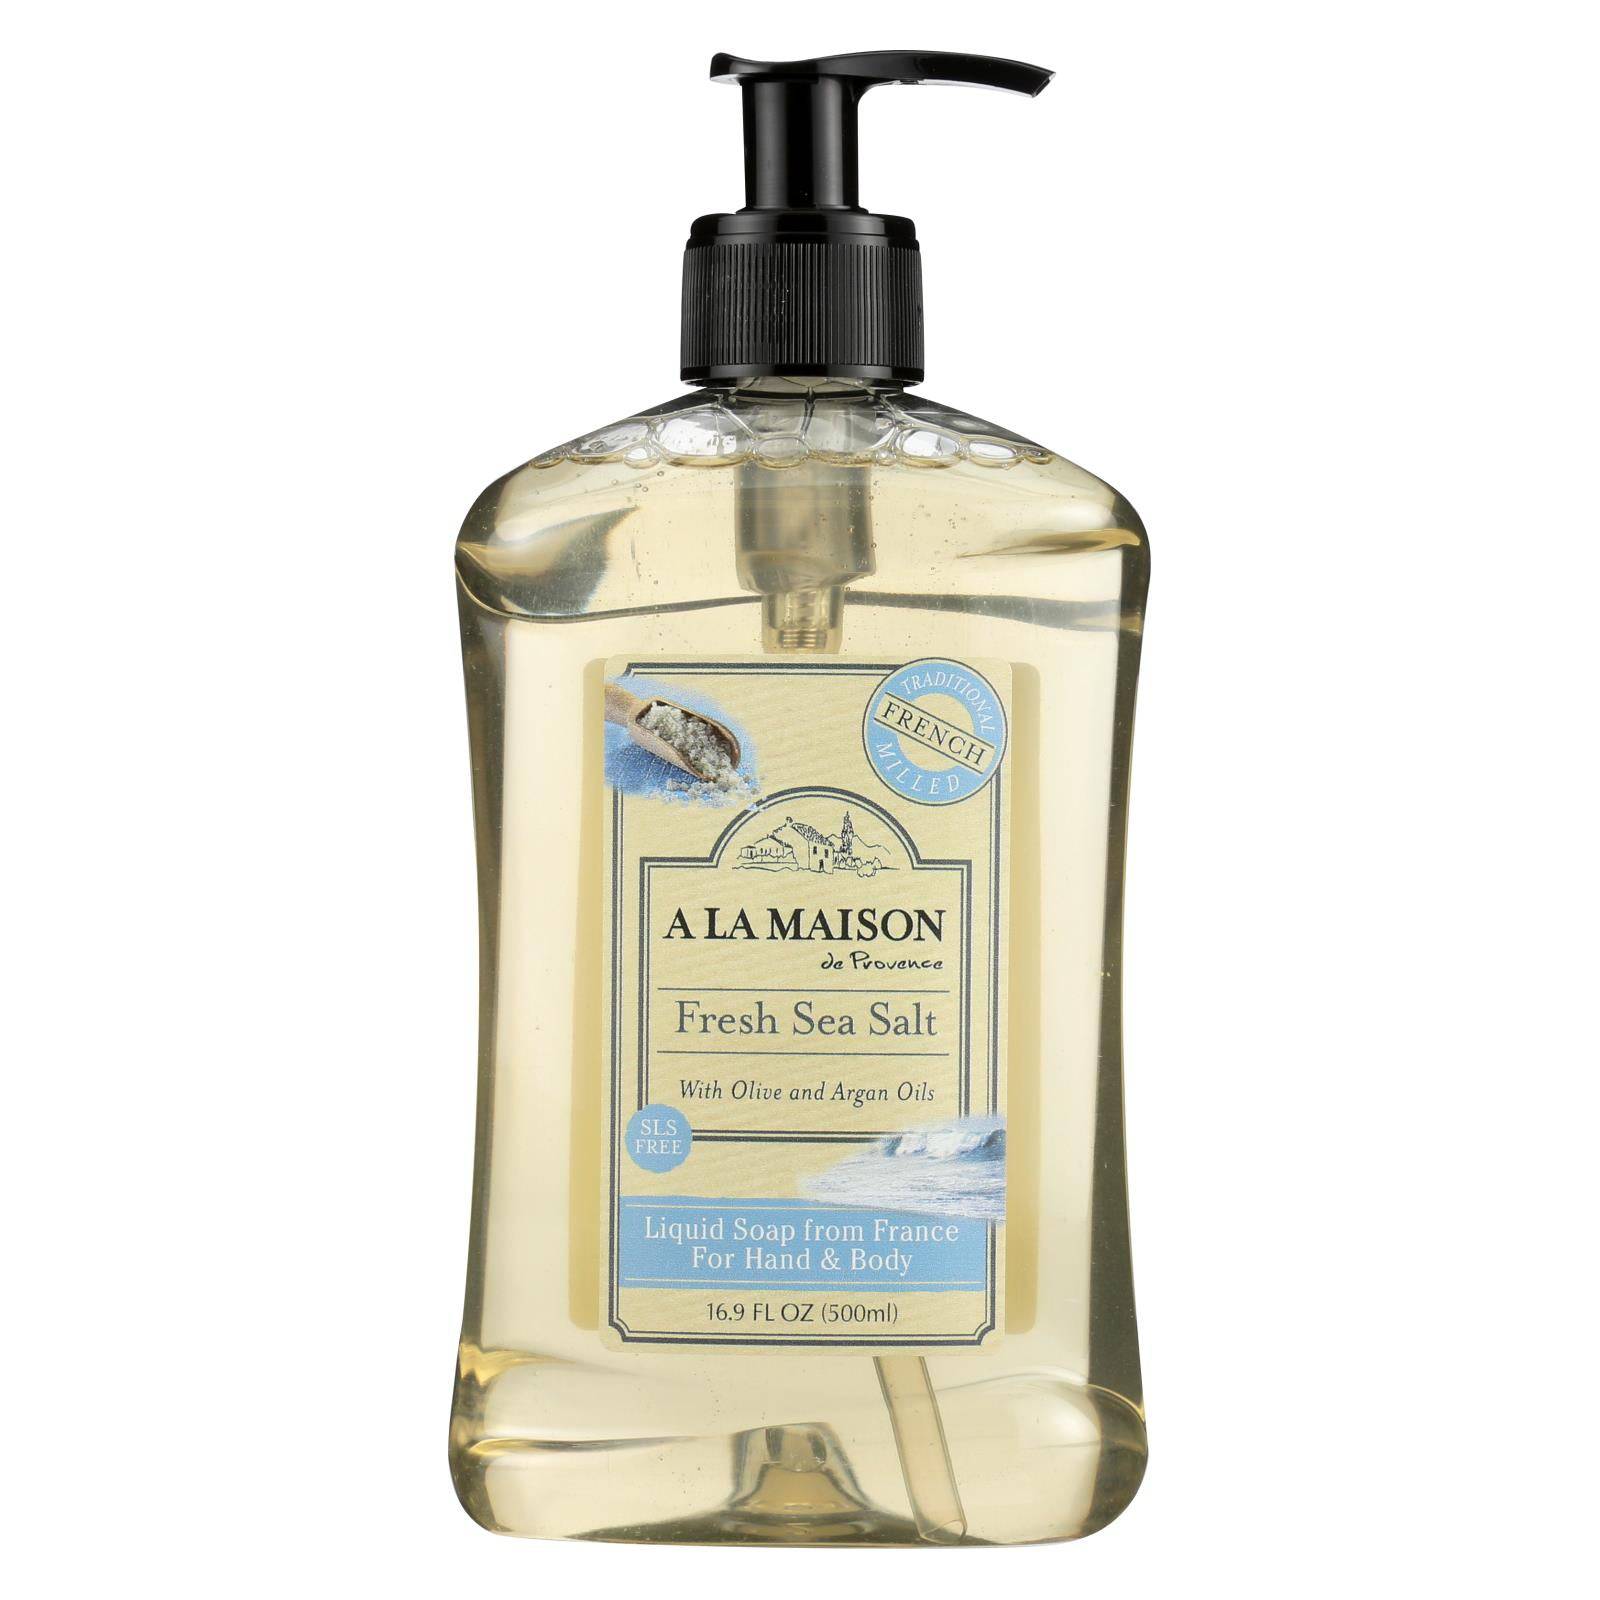 Buy A La Maison - French Liquid Soap - Fresh Sea Salt - 16.9 Oz  at OnlyNaturals.us